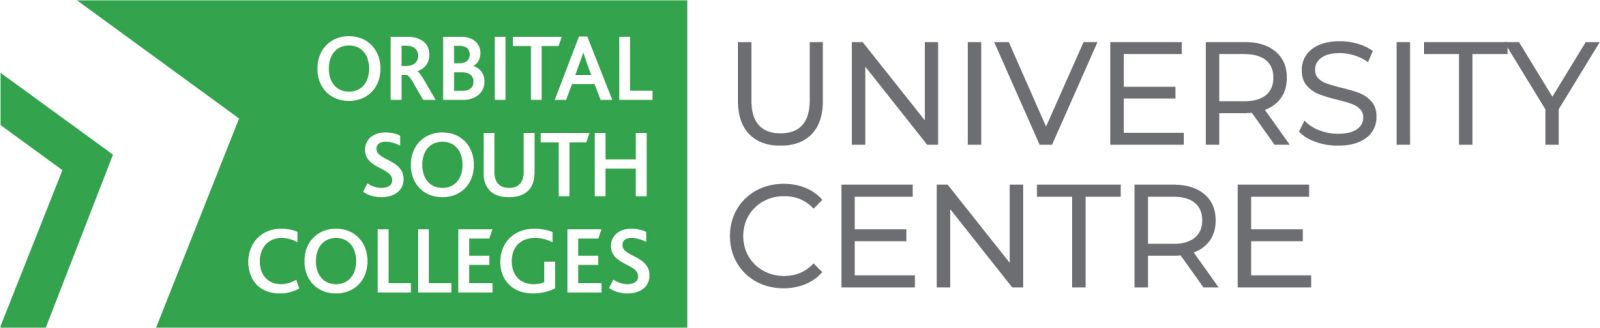 Orbital South Colleges University Centre logo